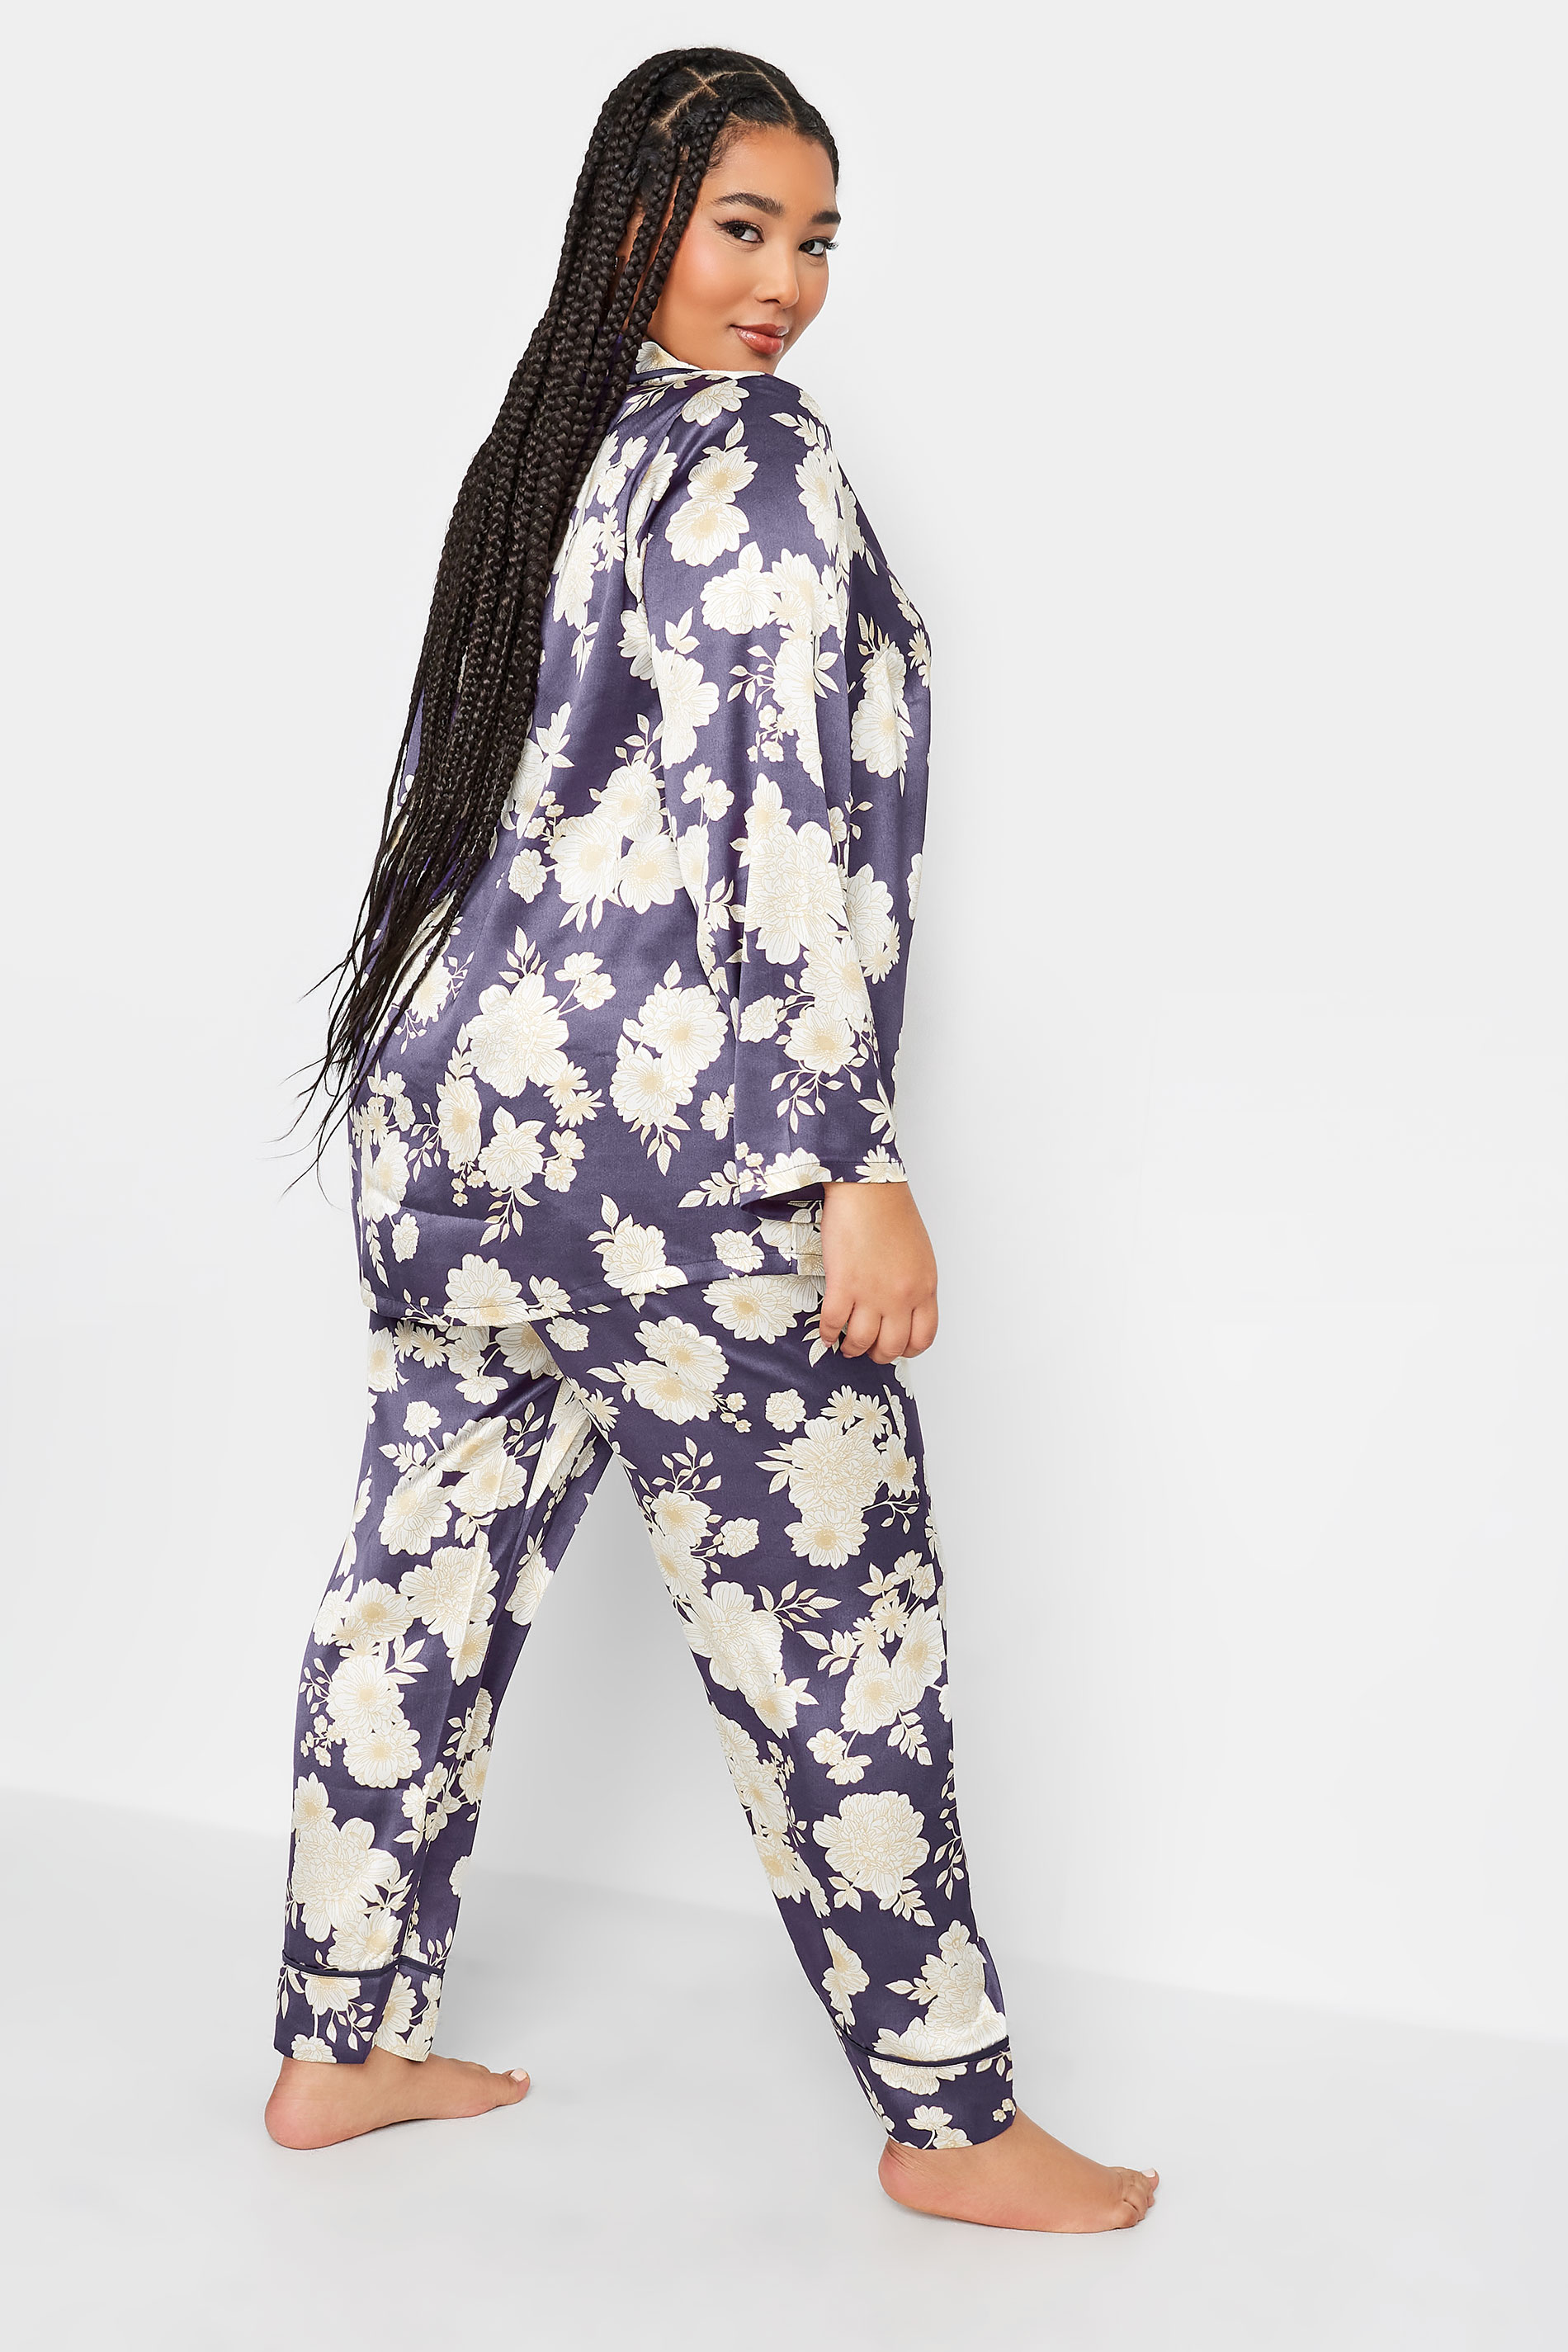 YOURS Plus Size Purple Floral Print Satin Pyjama Set | Yours Clothing 3